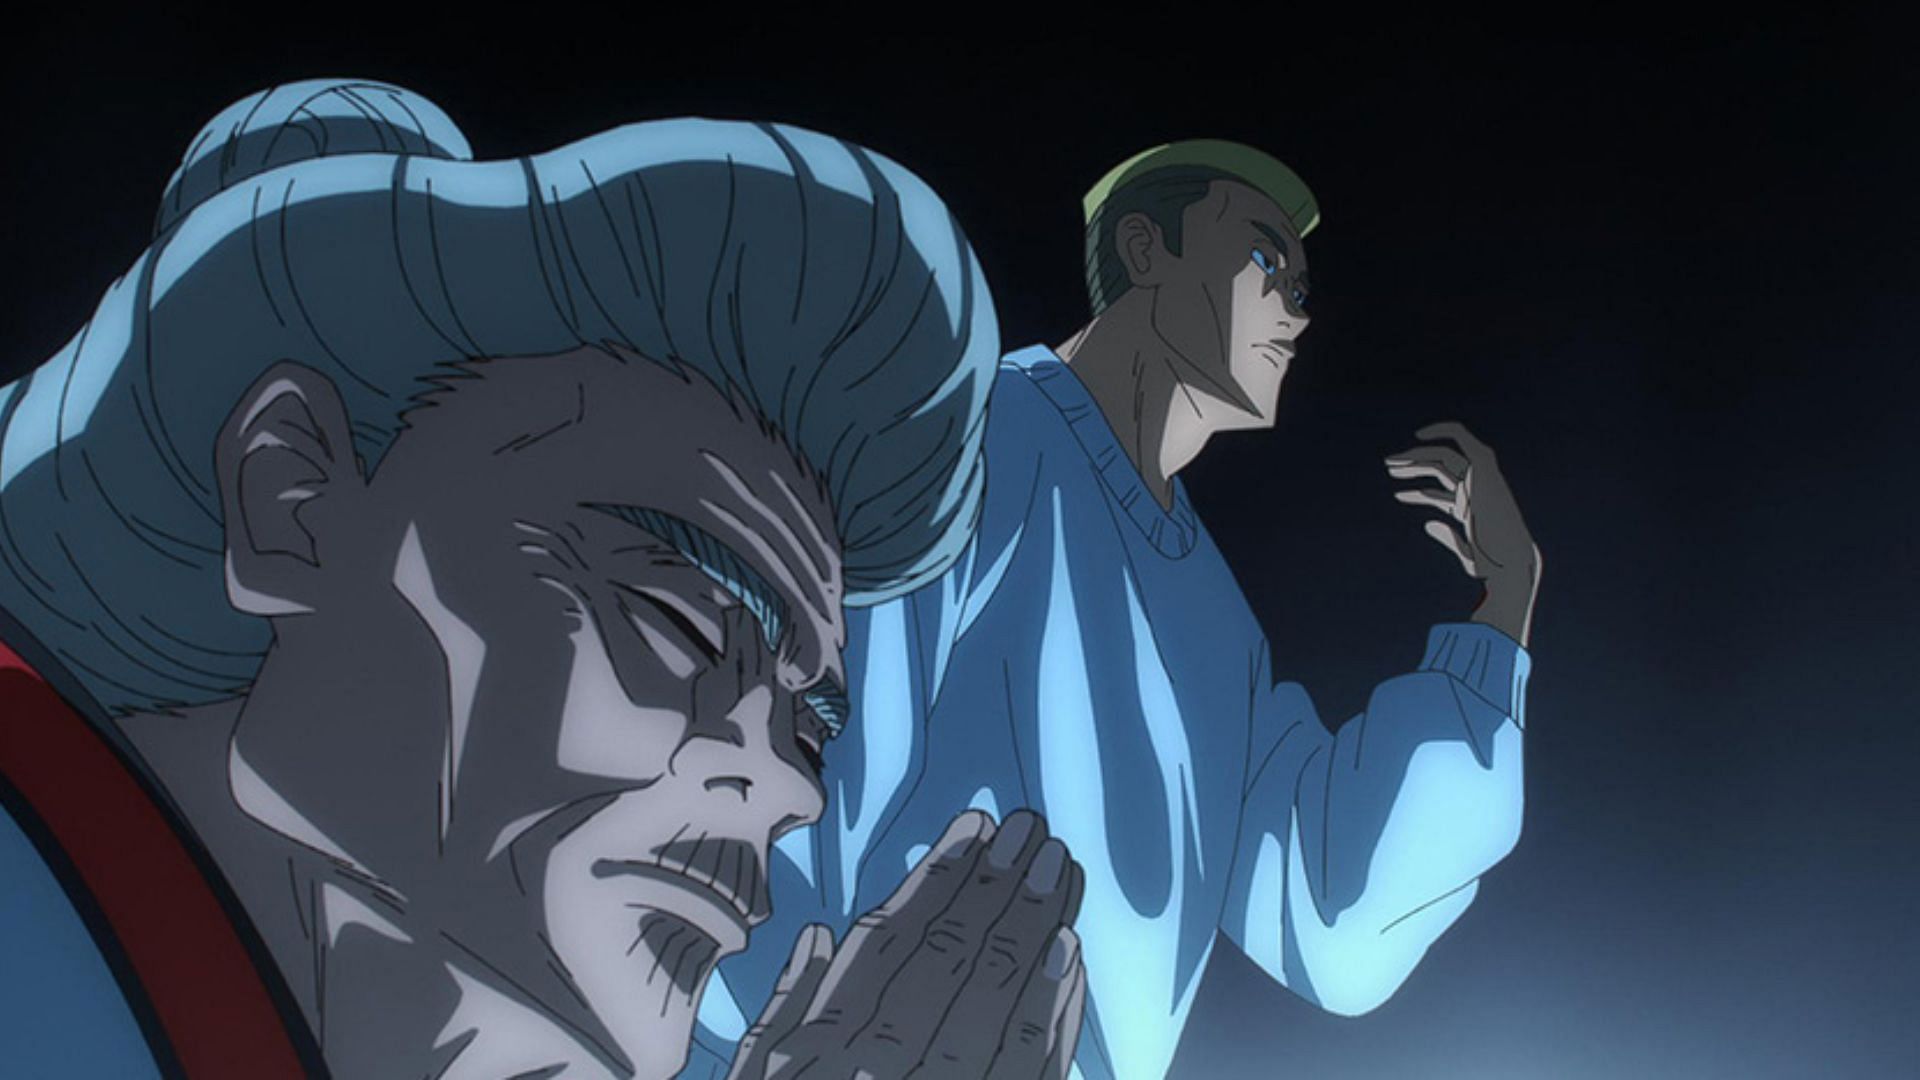 Jujutsu Kaisen Hype! Phantom Seer ending soon? - Anime After Hours Episode  11